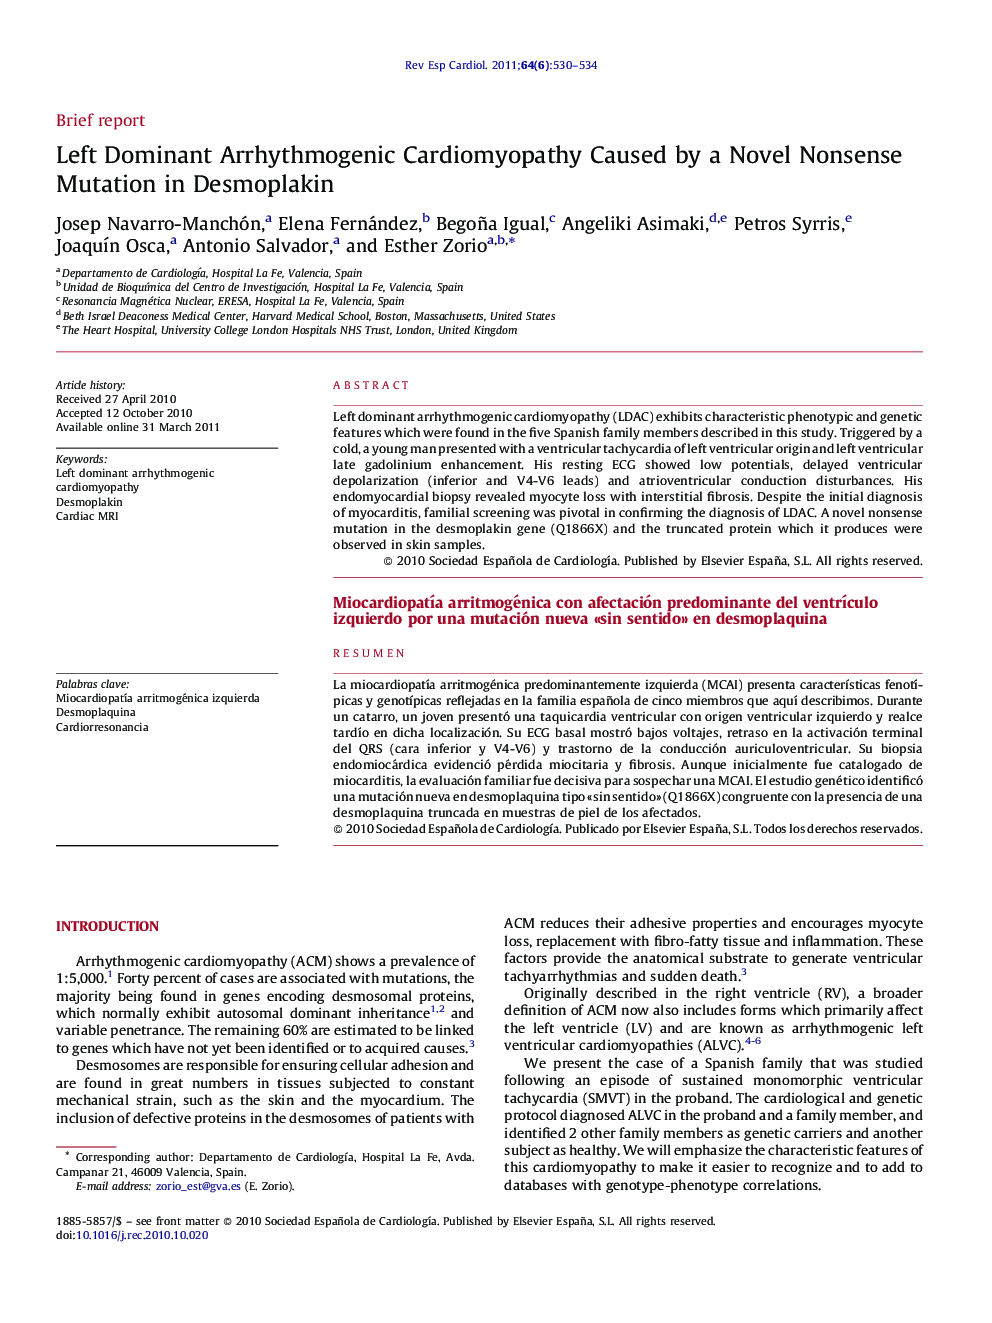 Left Dominant Arrhythmogenic Cardiomyopathy Caused by a Novel Nonsense Mutation in Desmoplakin